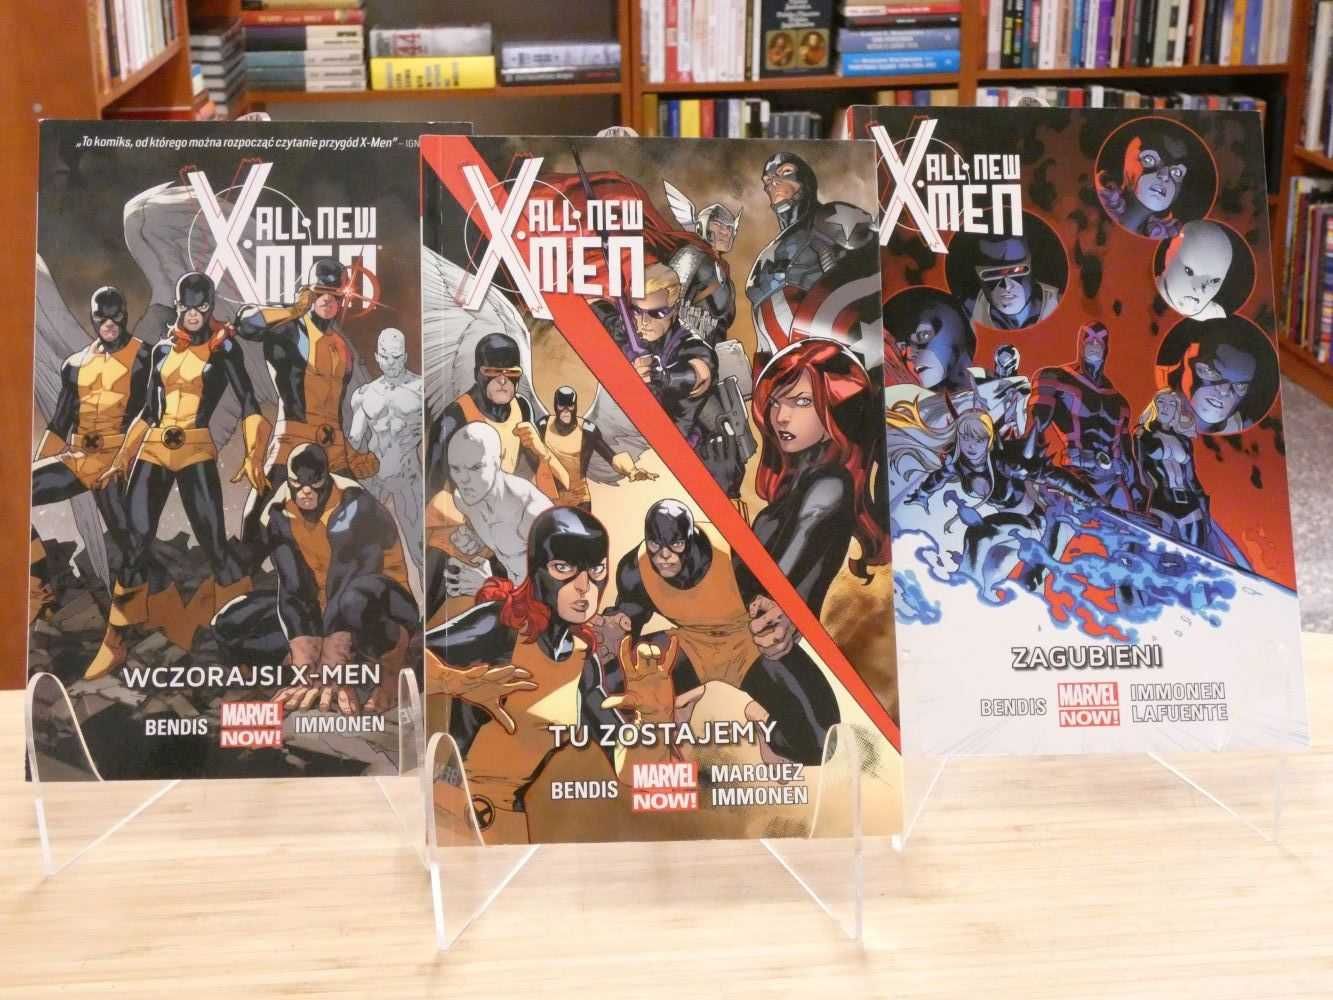 All New X-Men Wczorajsi X-Men 1-3 Marvel NOW!